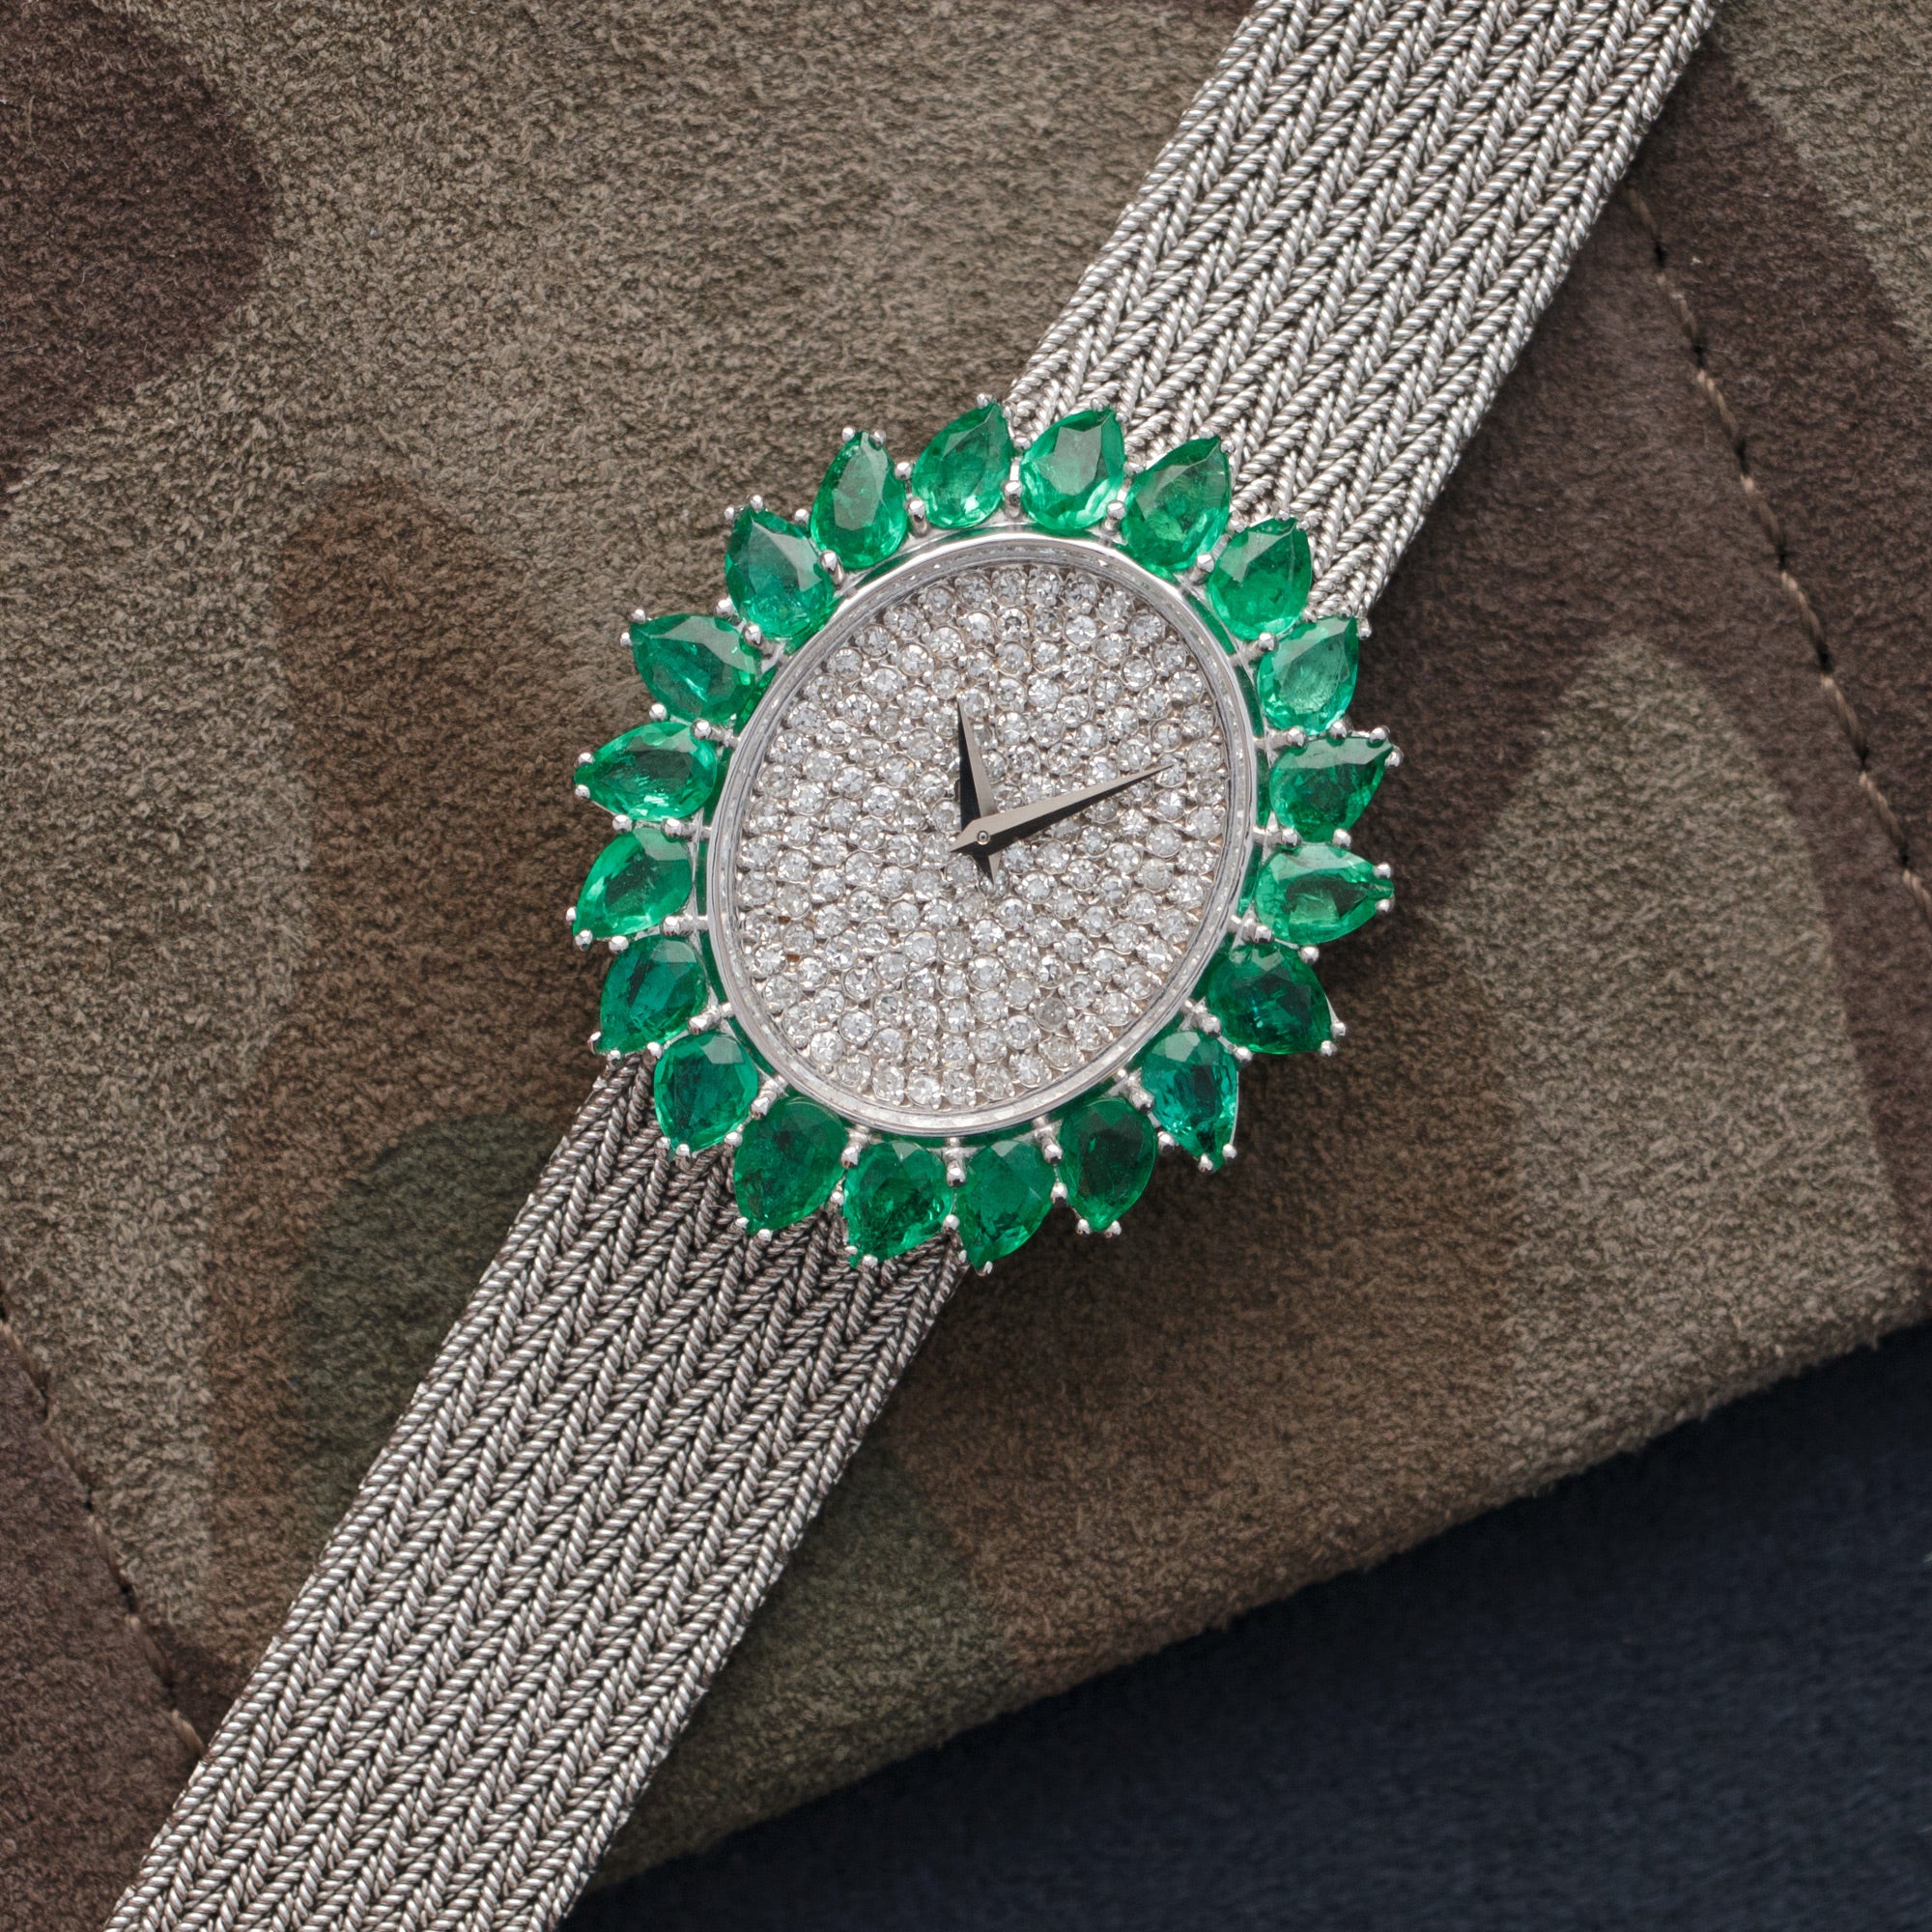 Vacheron Constantin - Vacheron Constantin White Gold Diamond & Emerald Watch - The Keystone Watches